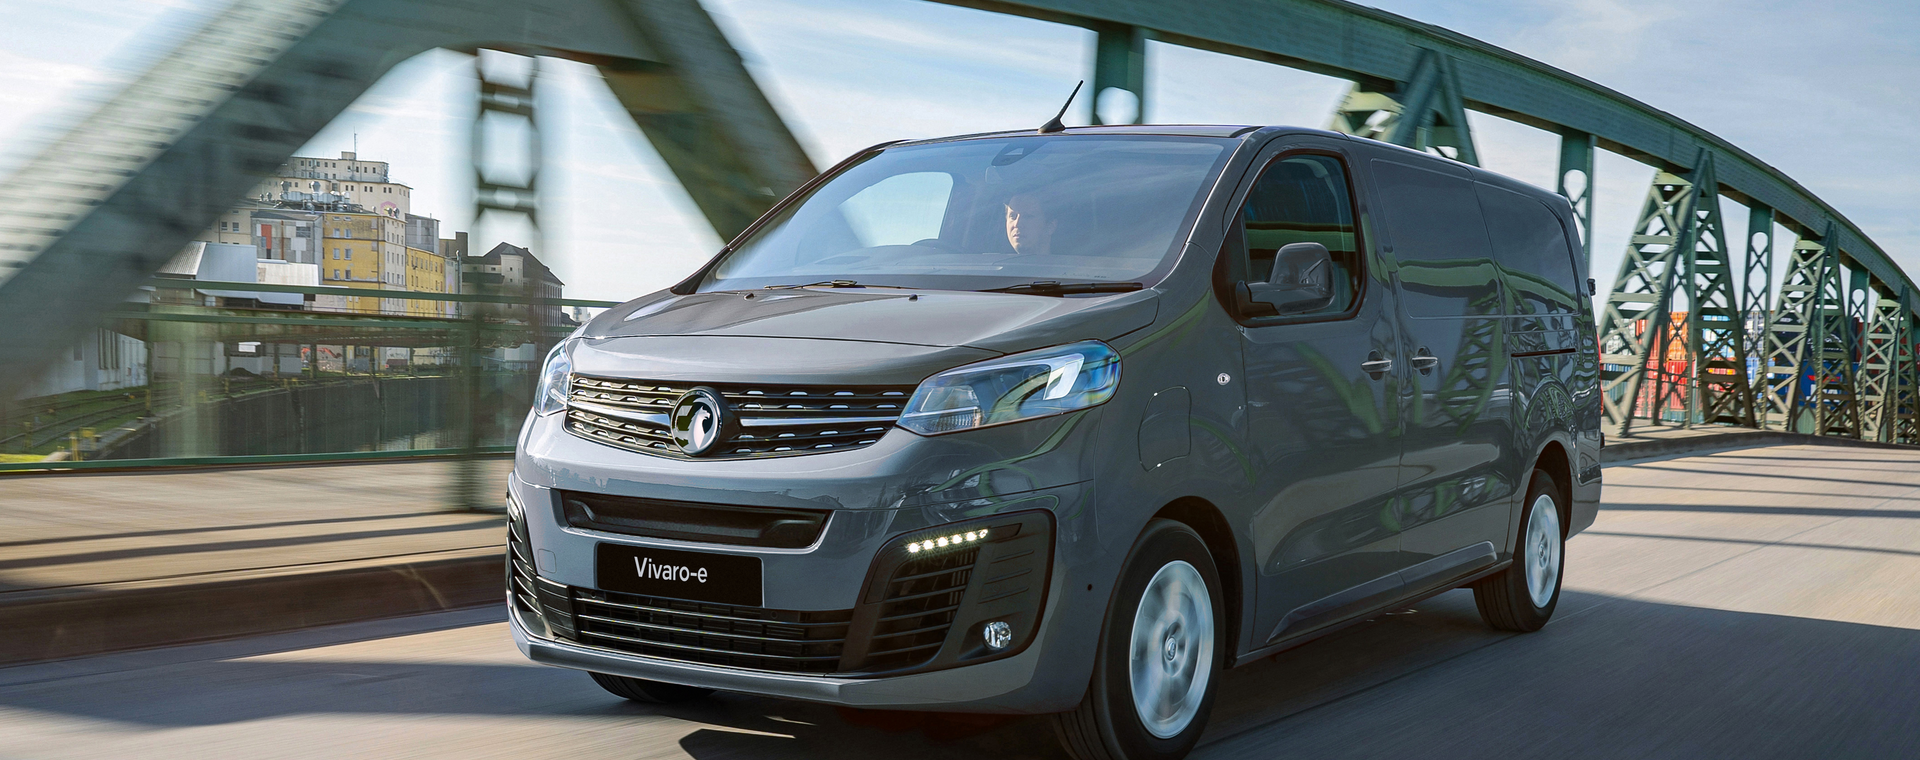 Vauxhall Vivaro-e Hero Image